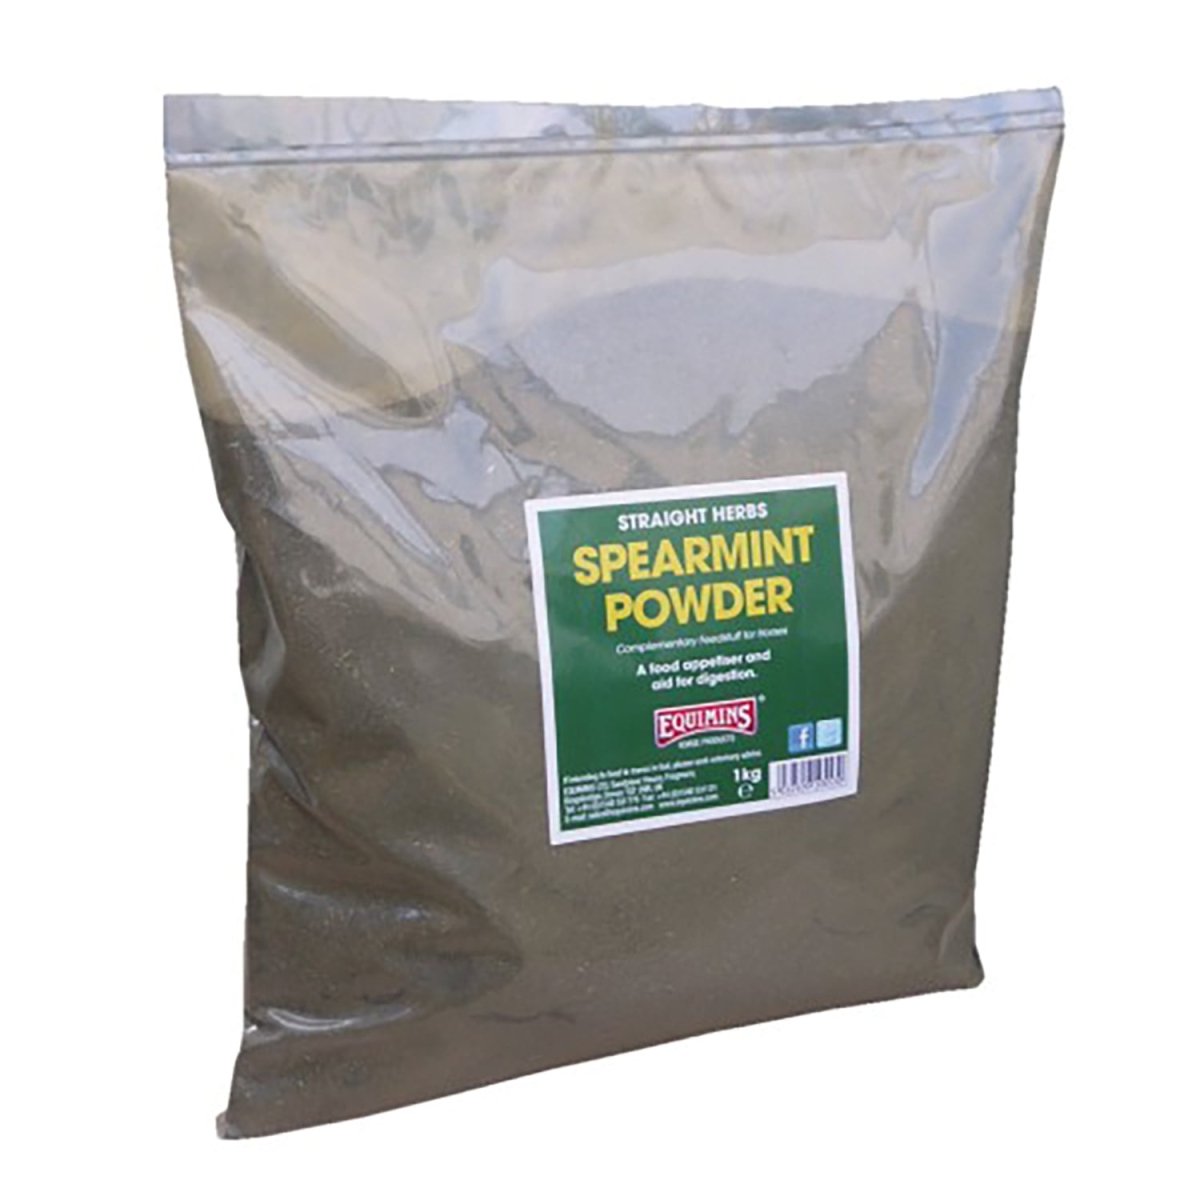 Equimins Straight Herbs Spearmint Powder - 1Kg -